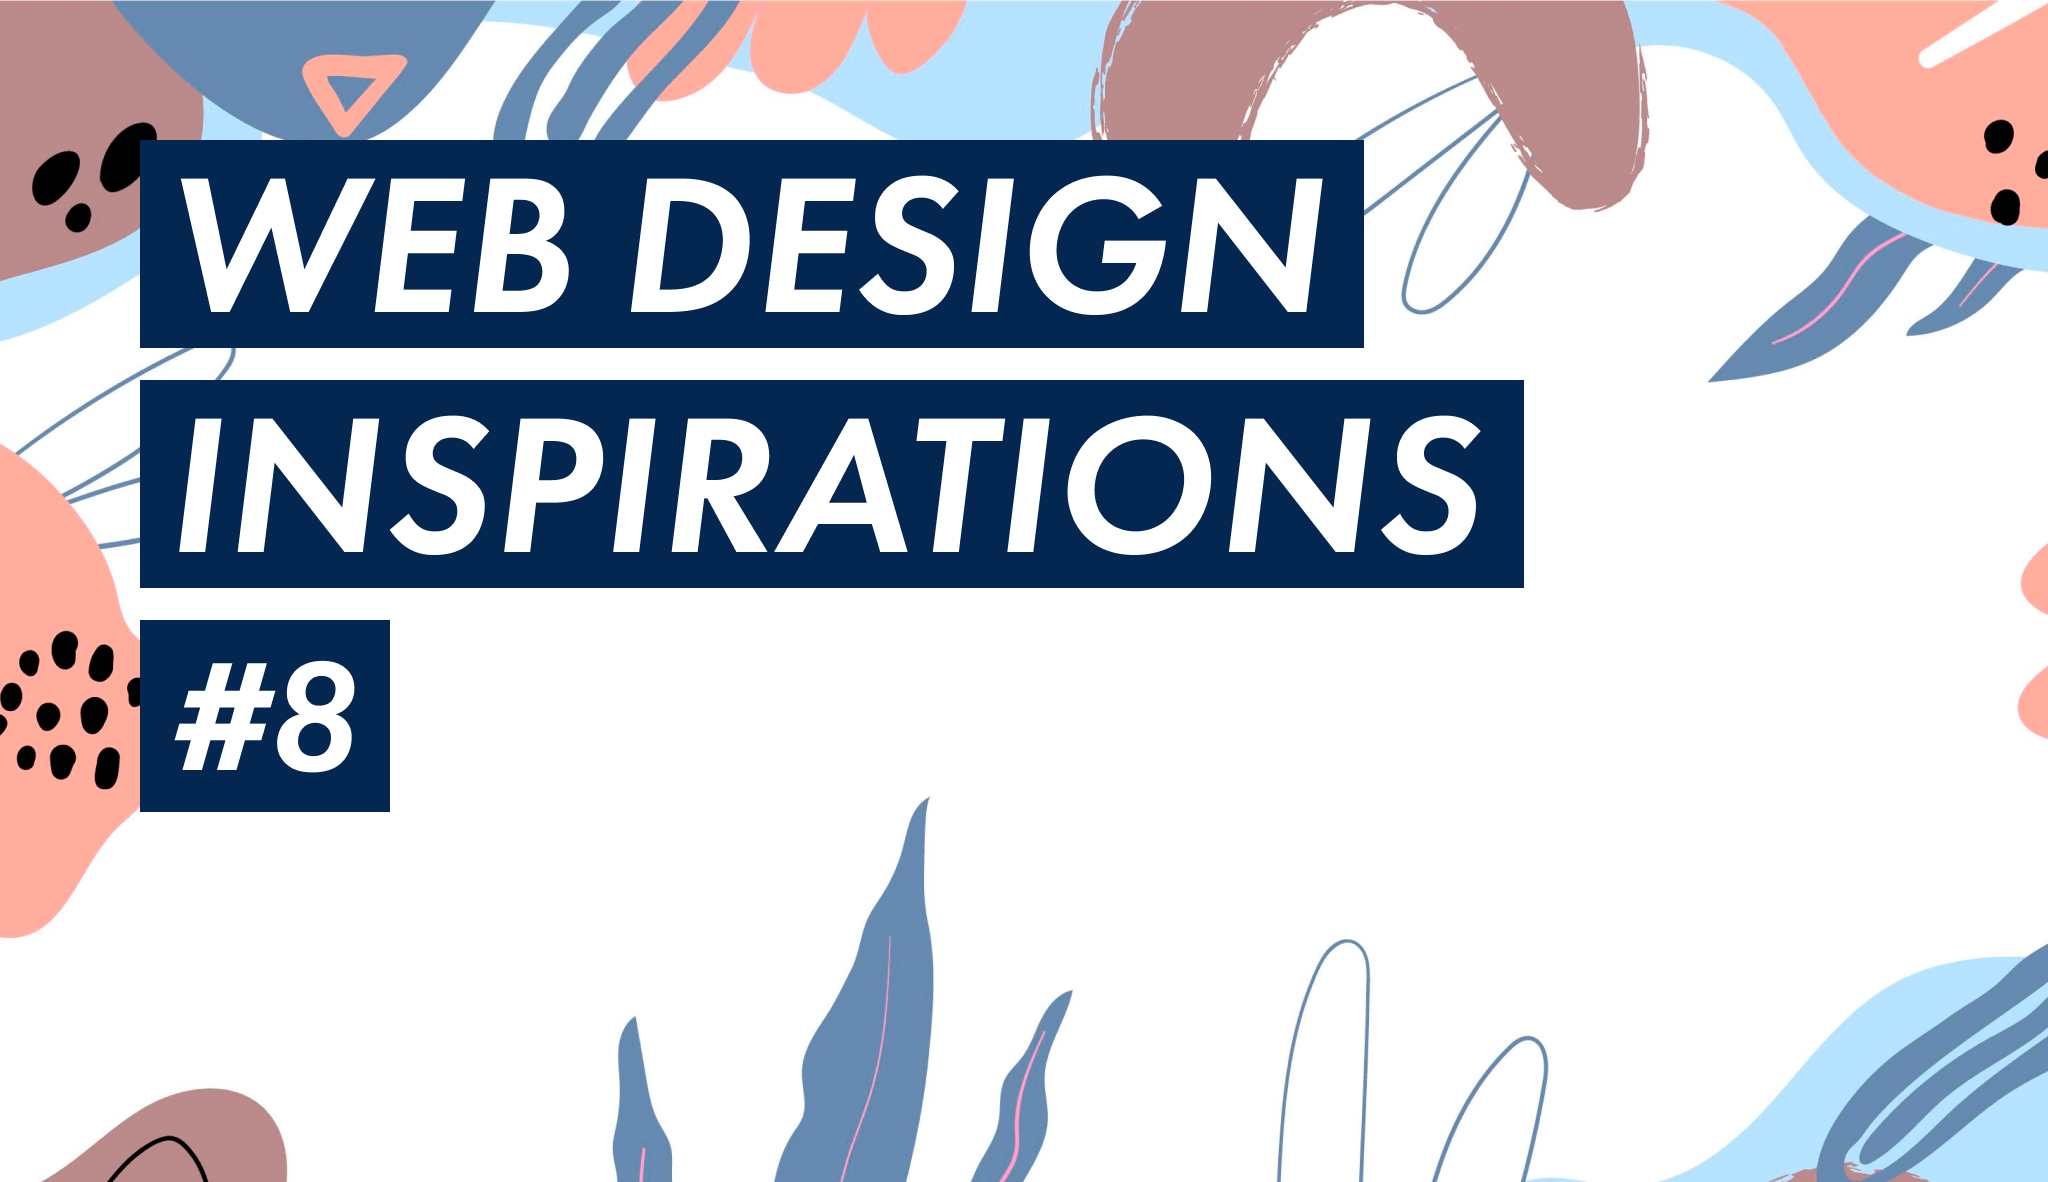 Web Design Inspirations #8